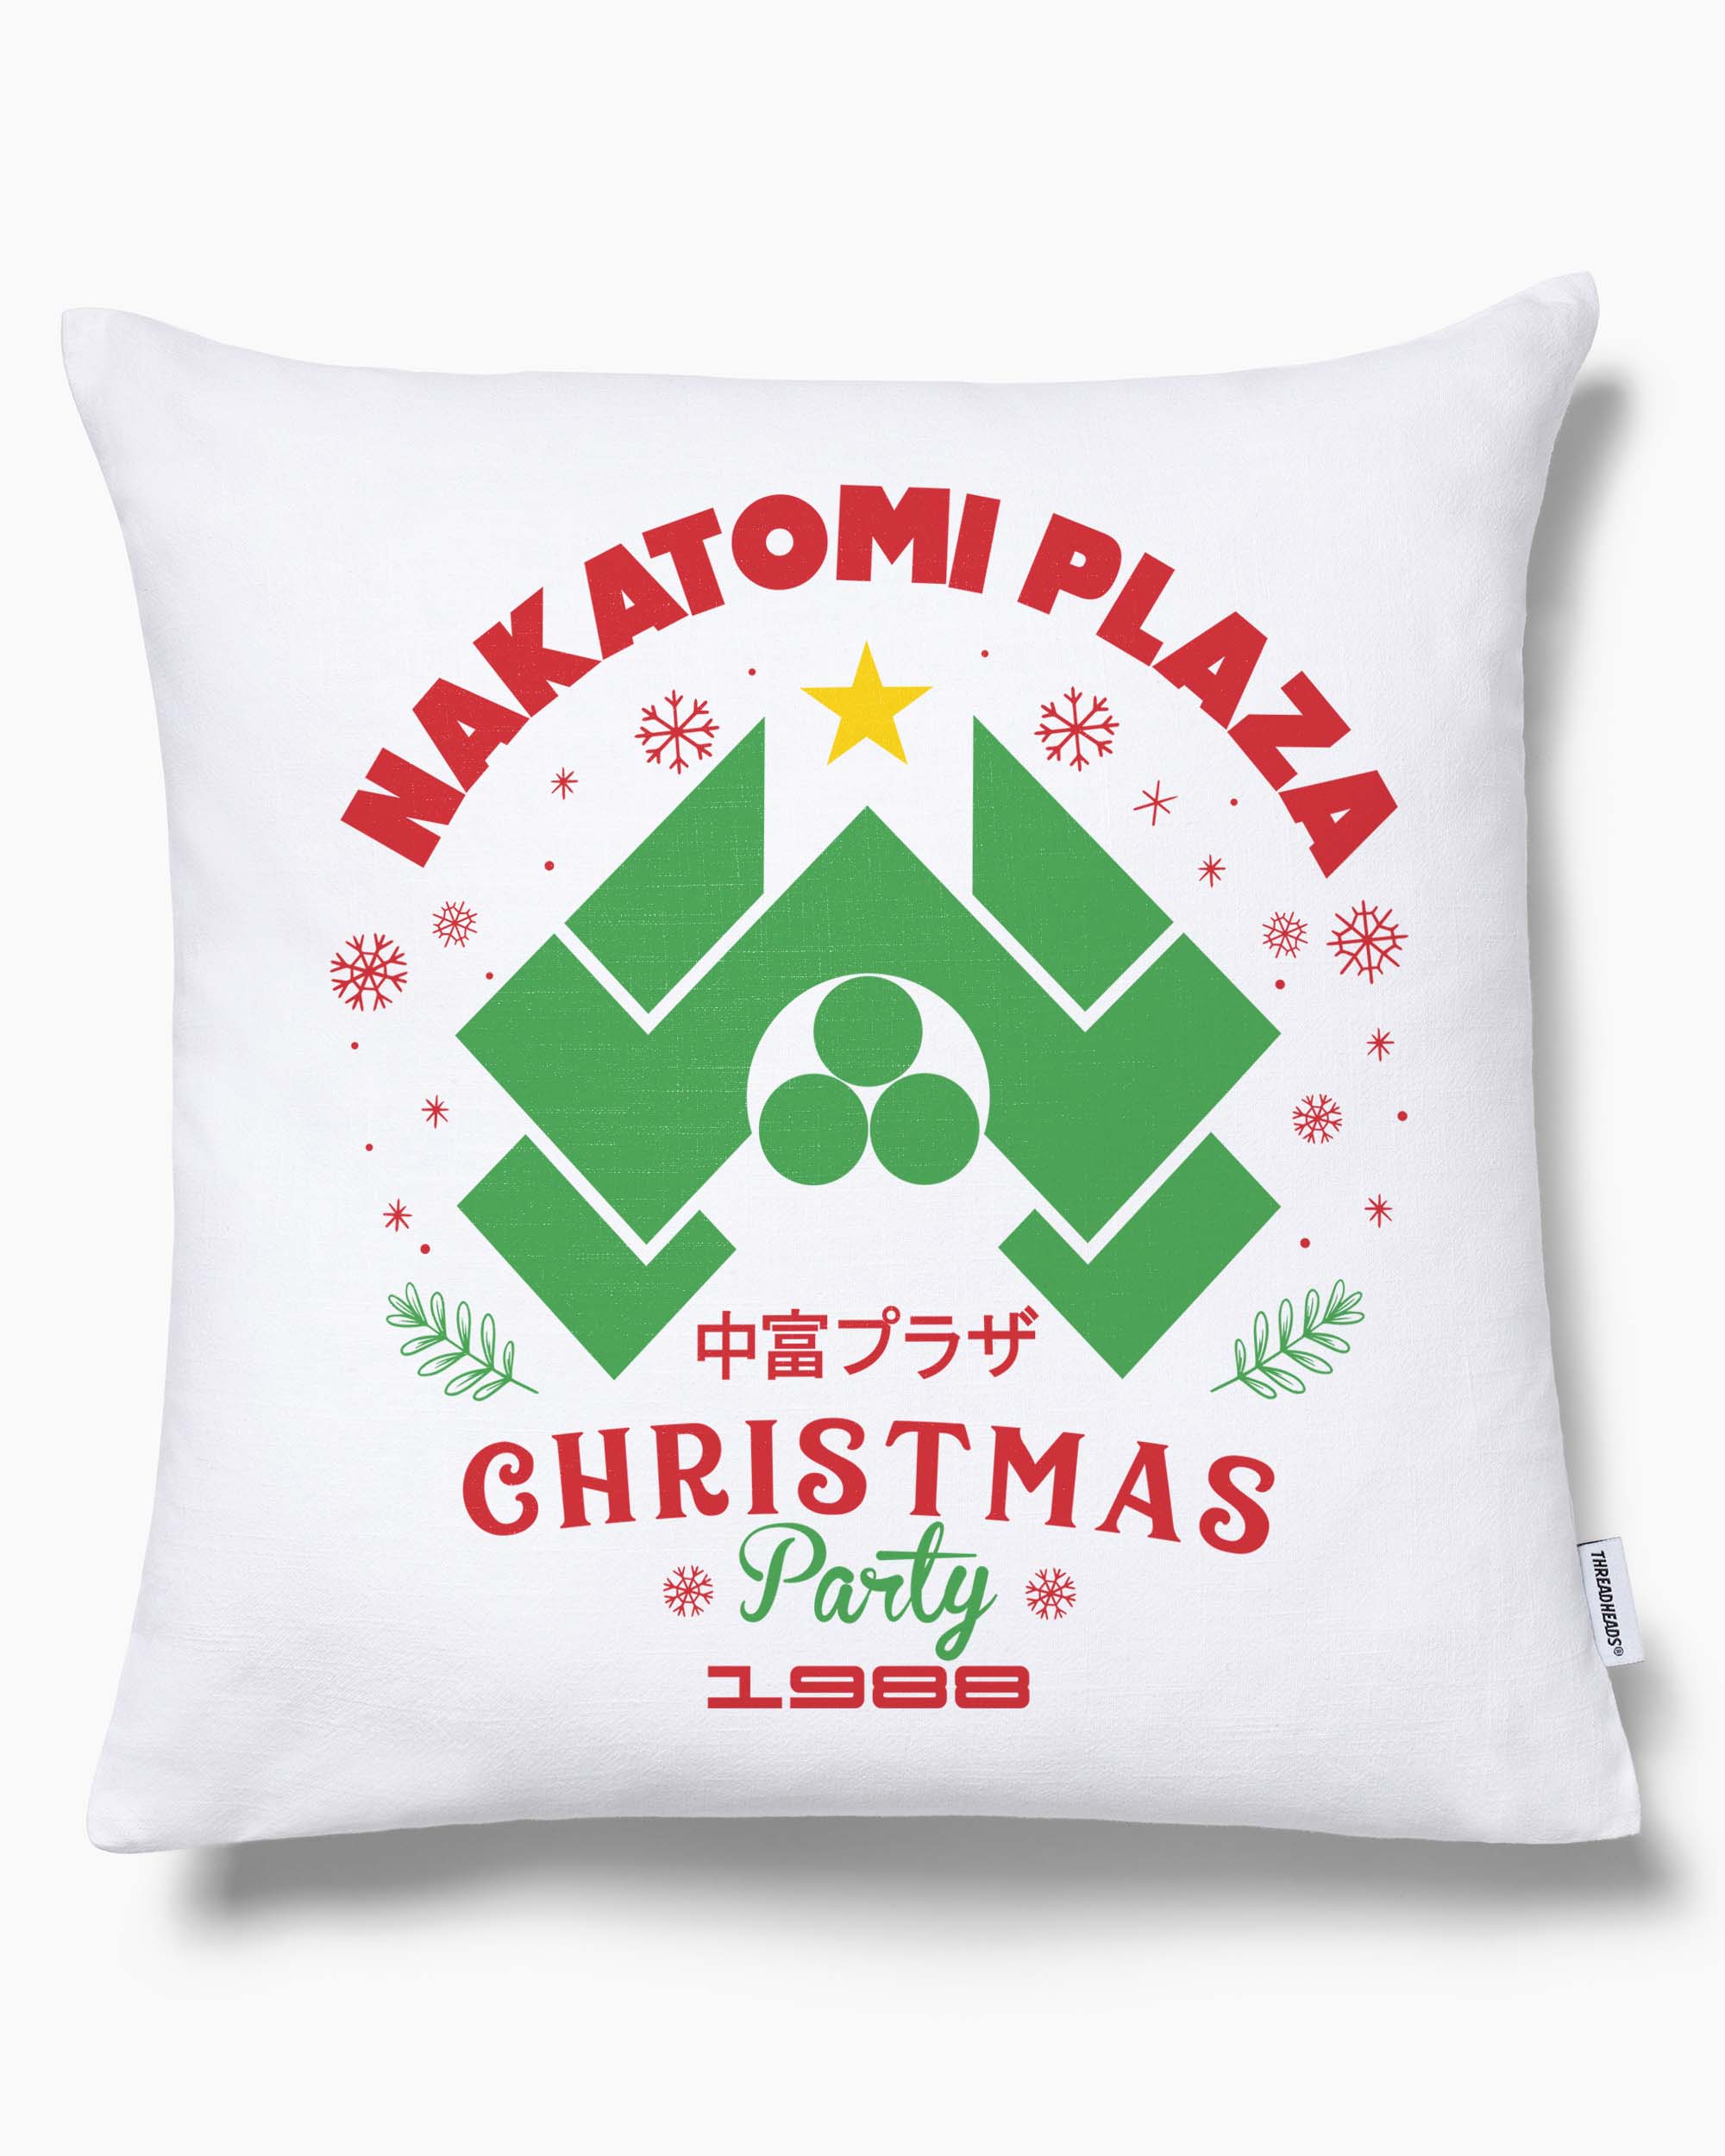 Nakatomi Christmas Party 1988 Cushion